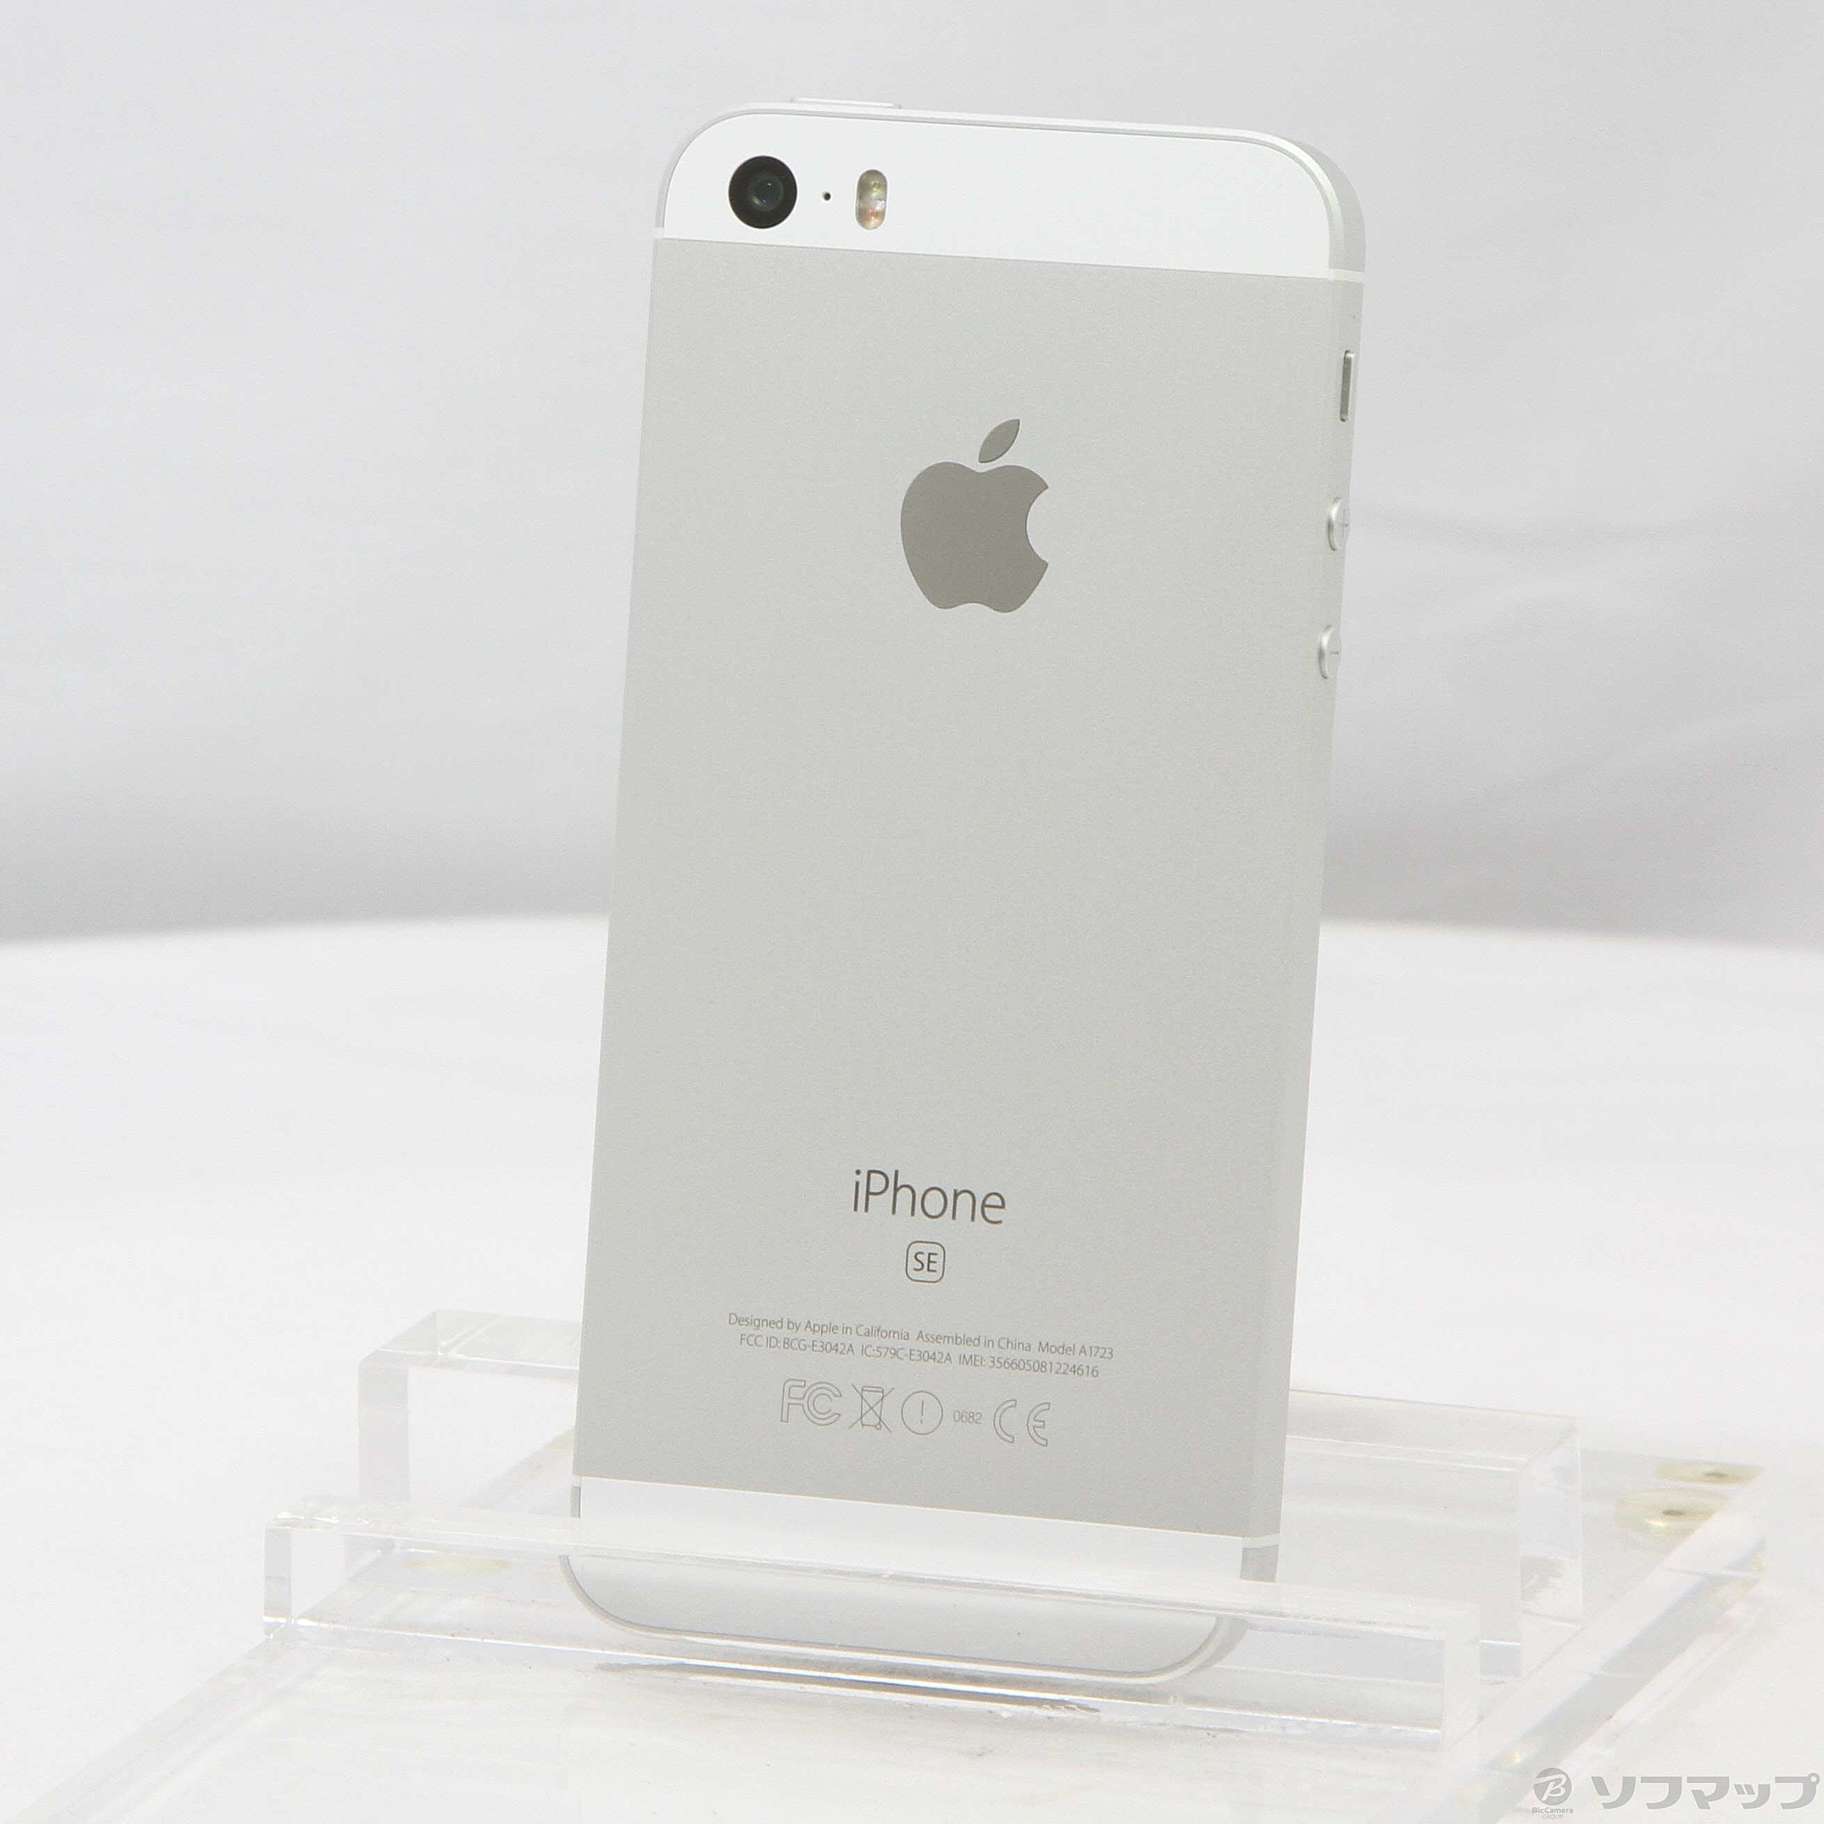 春早割 iPhone SE Silver 32 GB Softbank MP832J A